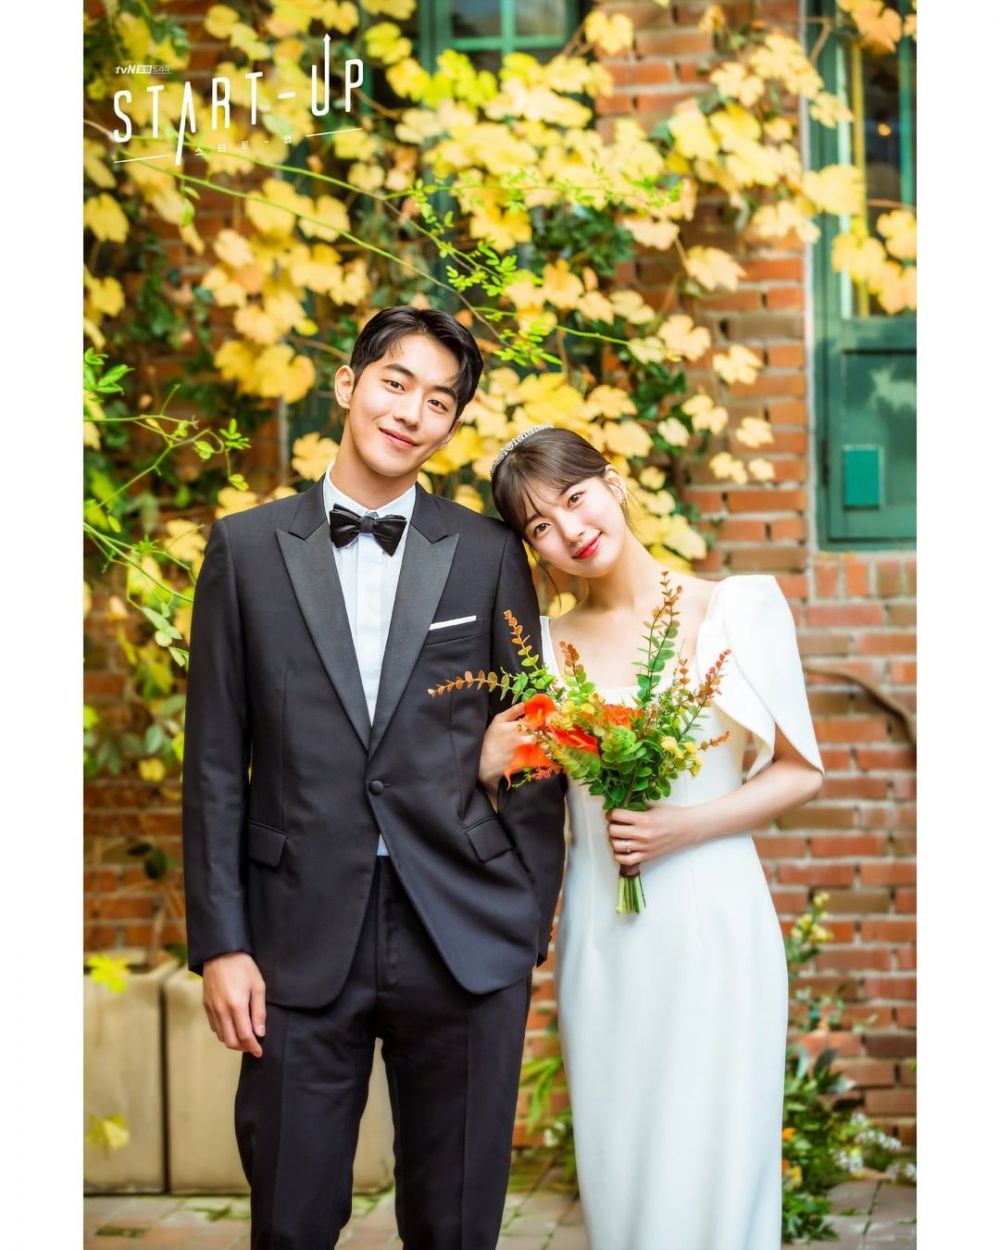 Happy Ending, 10 Potret Pernikahan Suzy dan Nam Joo Hyuk di 'Start-Up'